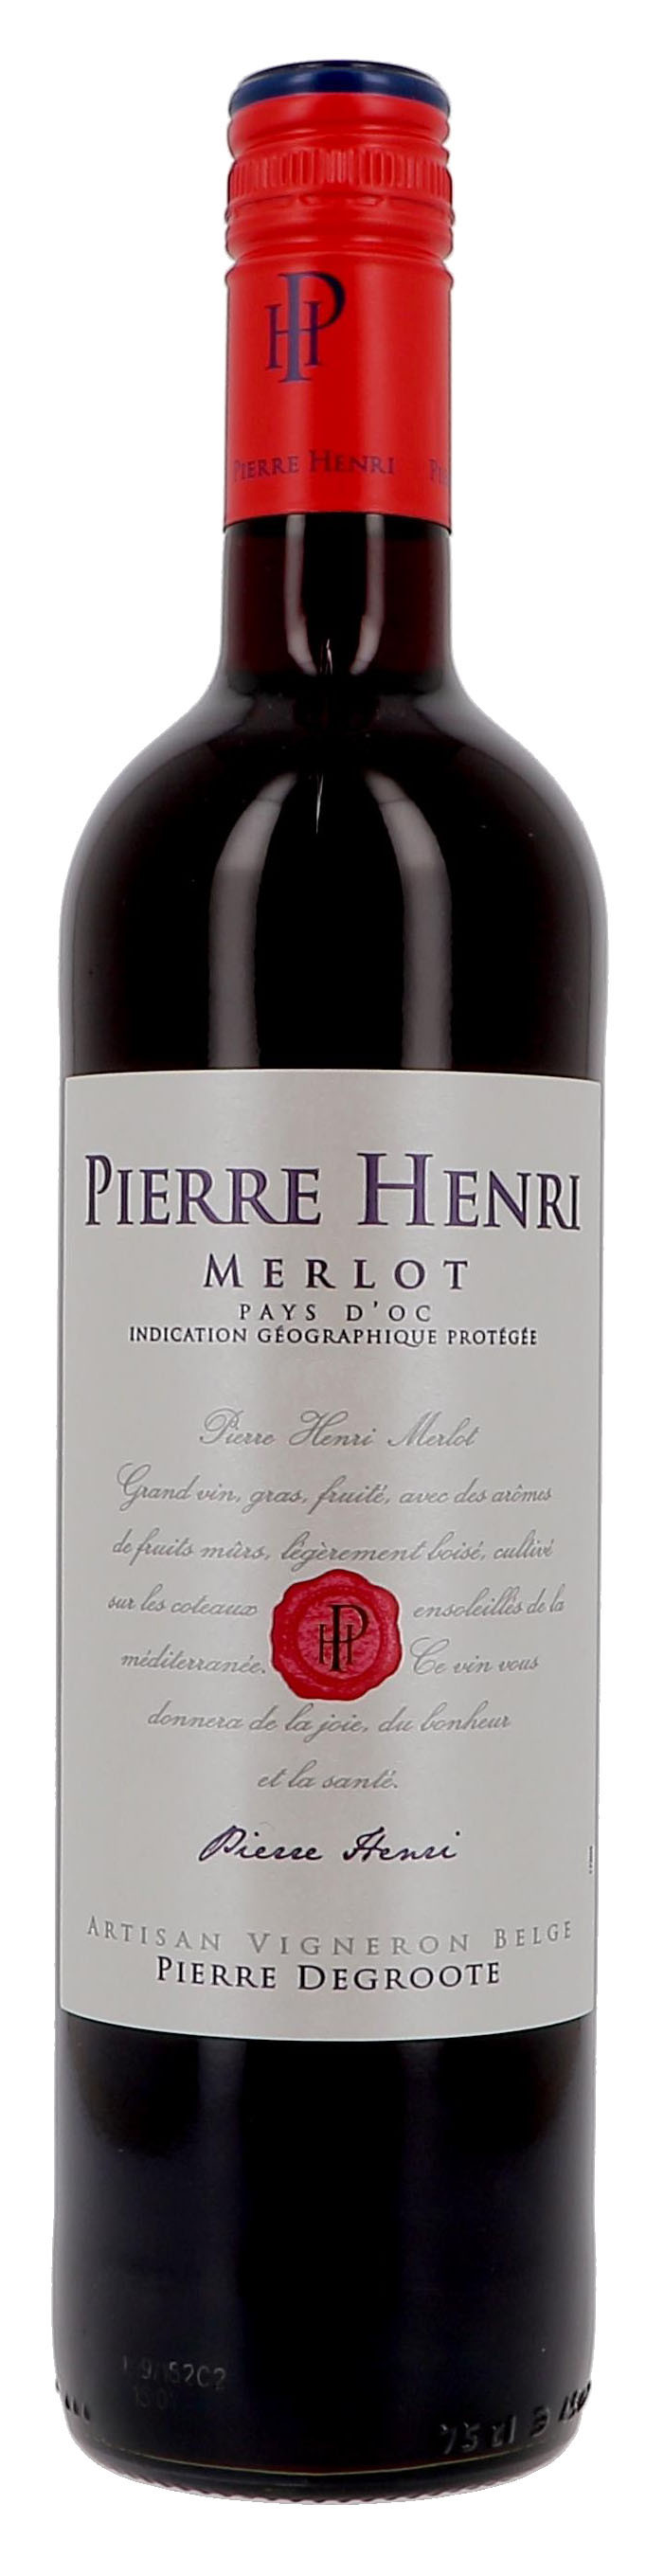 Merlot Pierre Henri 75cl Vin de Pays d'Oc (Wijnen)